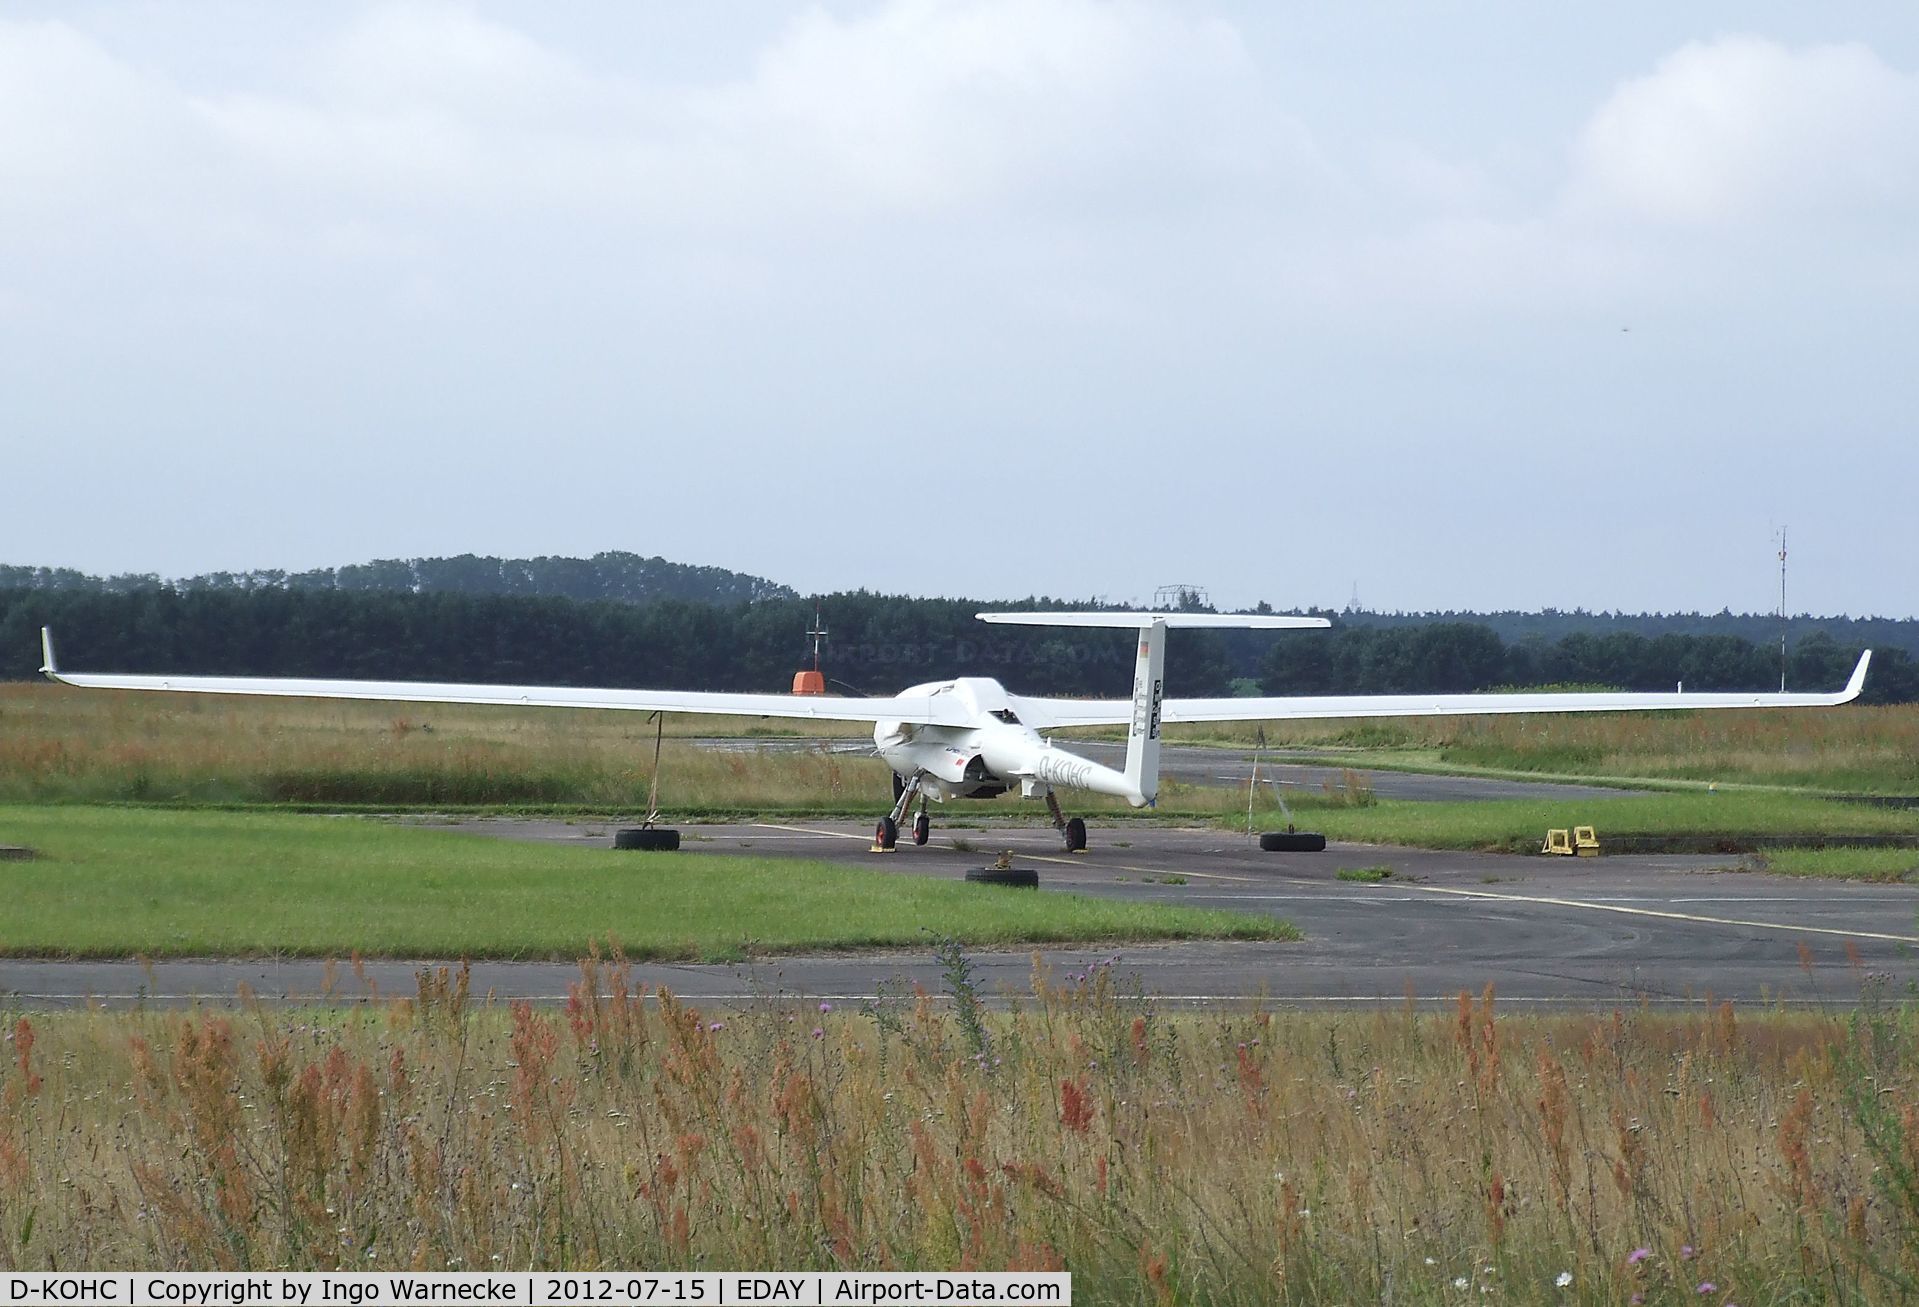 D-KOHC, Stemme S-15 Condor II C/N Not found D-KOHC, Stemme S-15 Condor II OMCoSS (OHB Multimission Communication Surveillance System) at Strausberg airfield